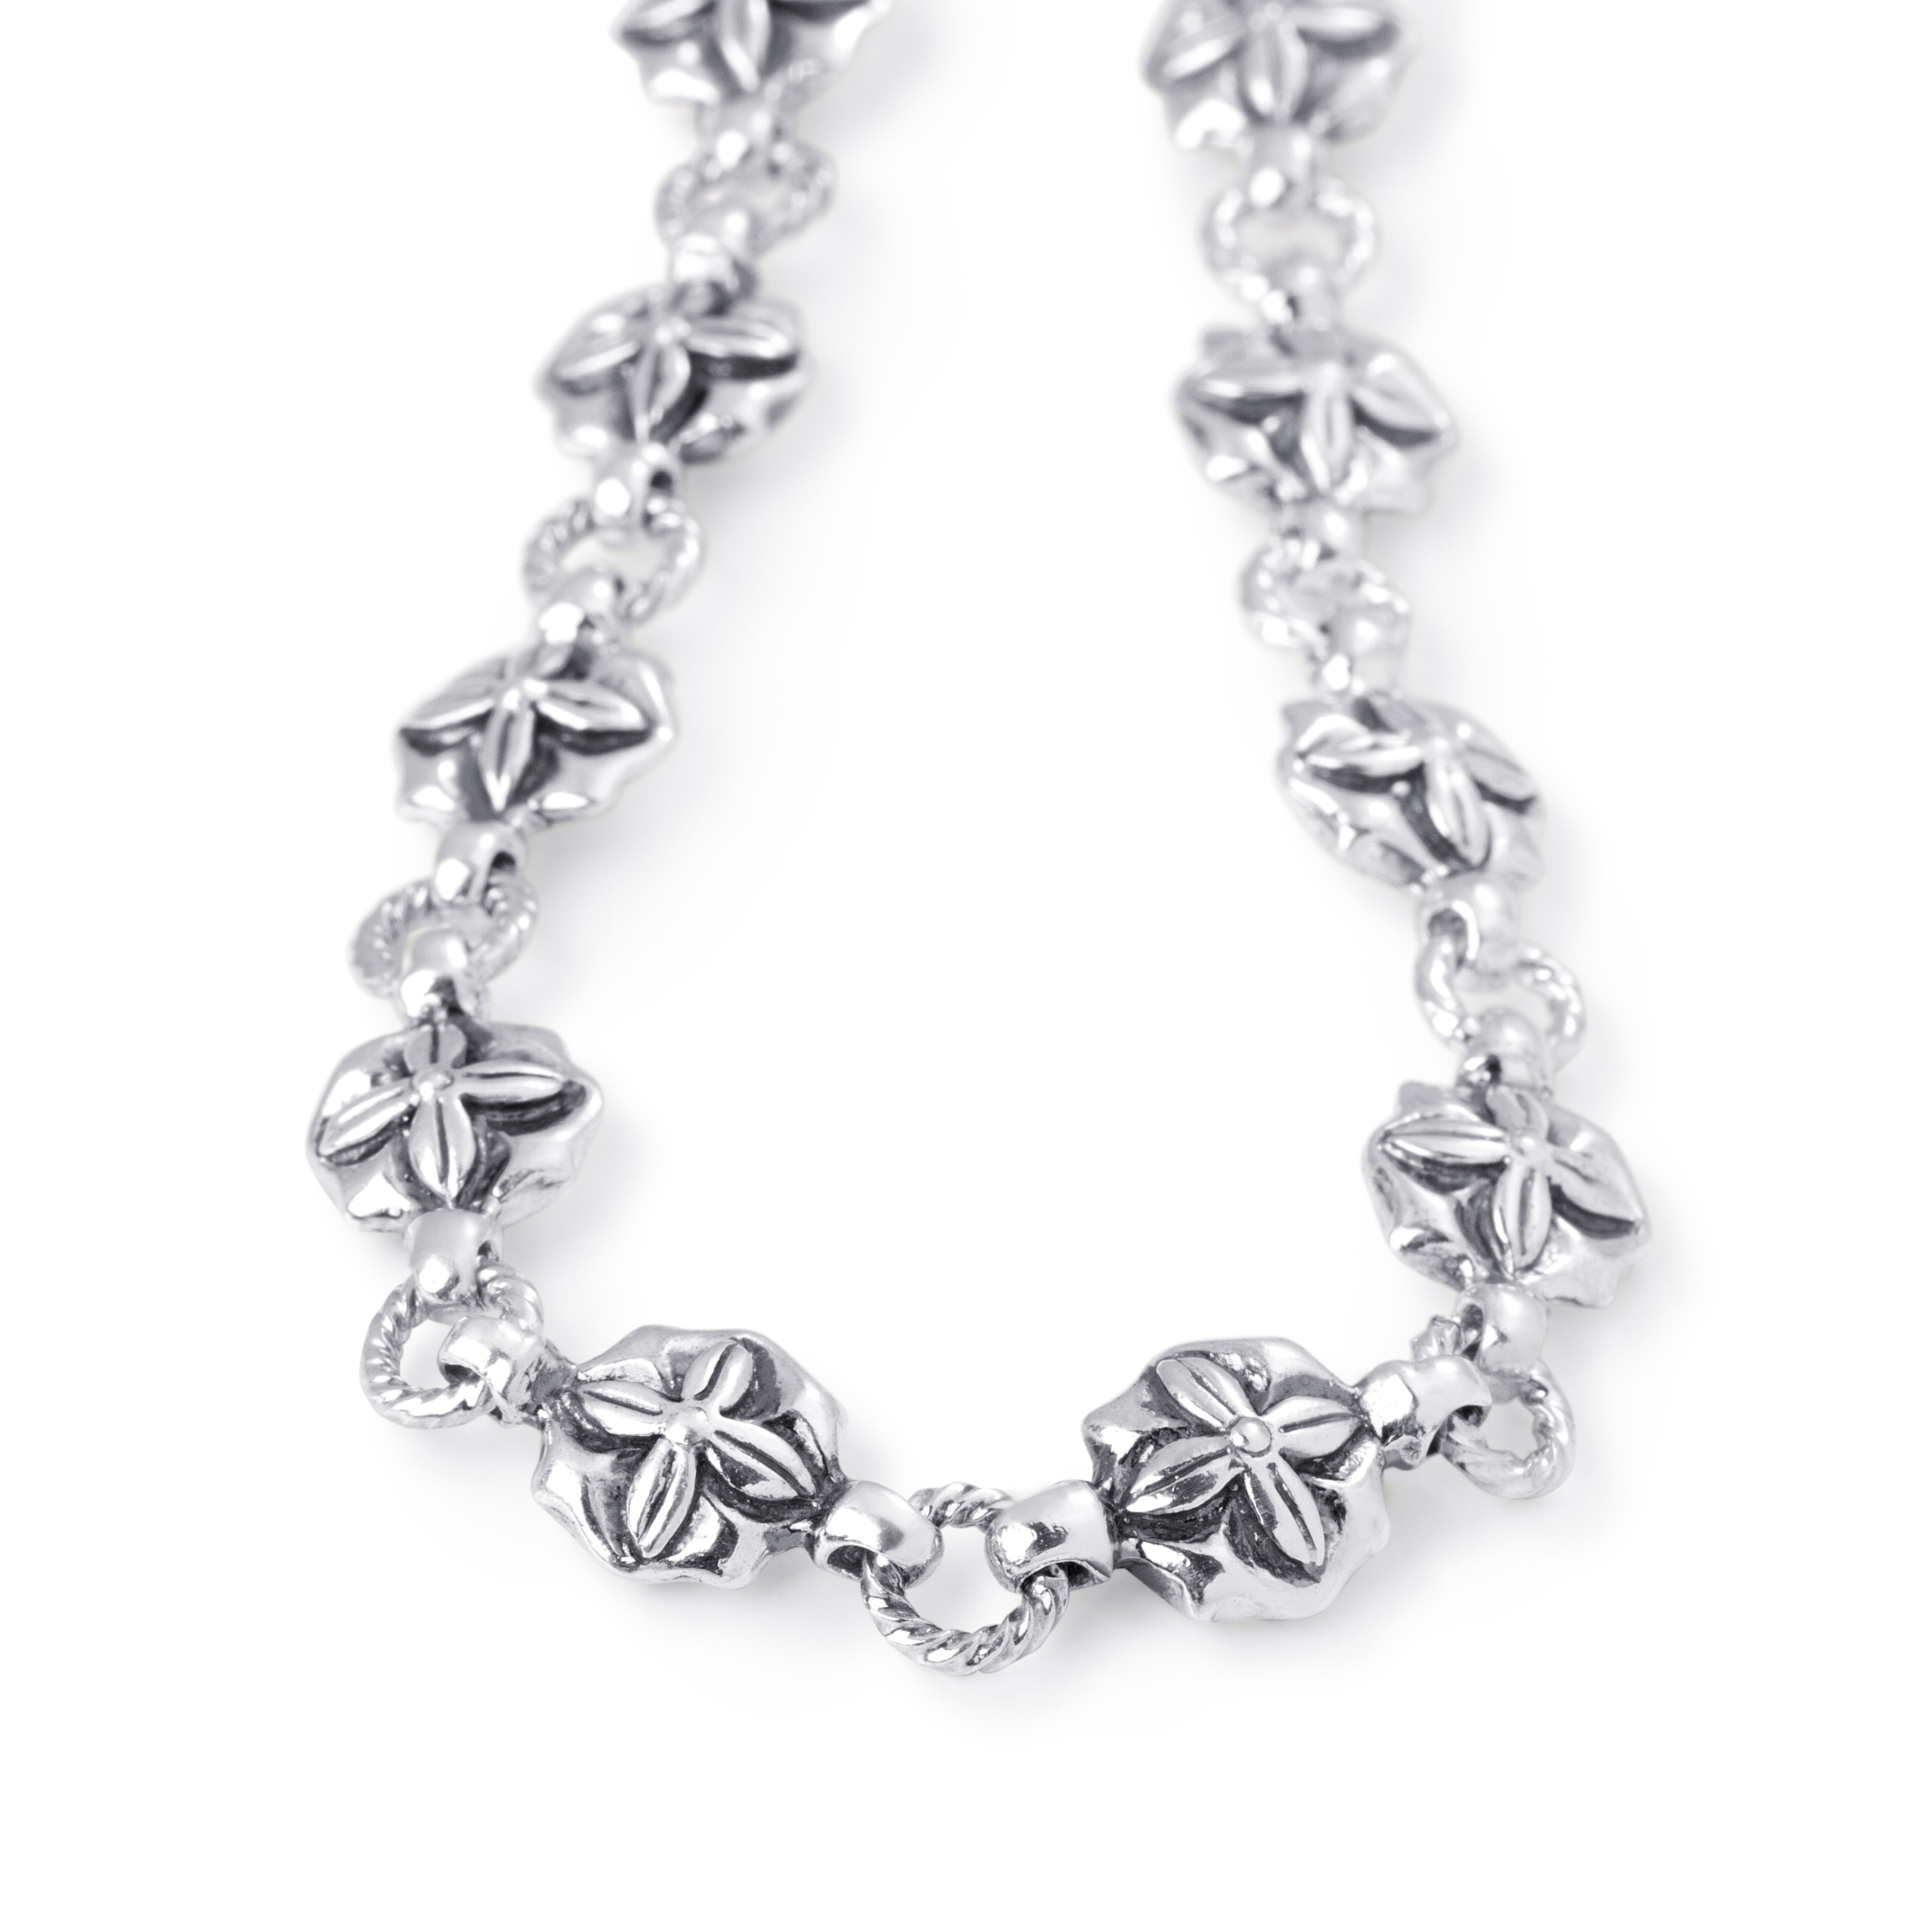 Antique Floral Ⅱ Link Necklace in Sterling Silver, 11mm